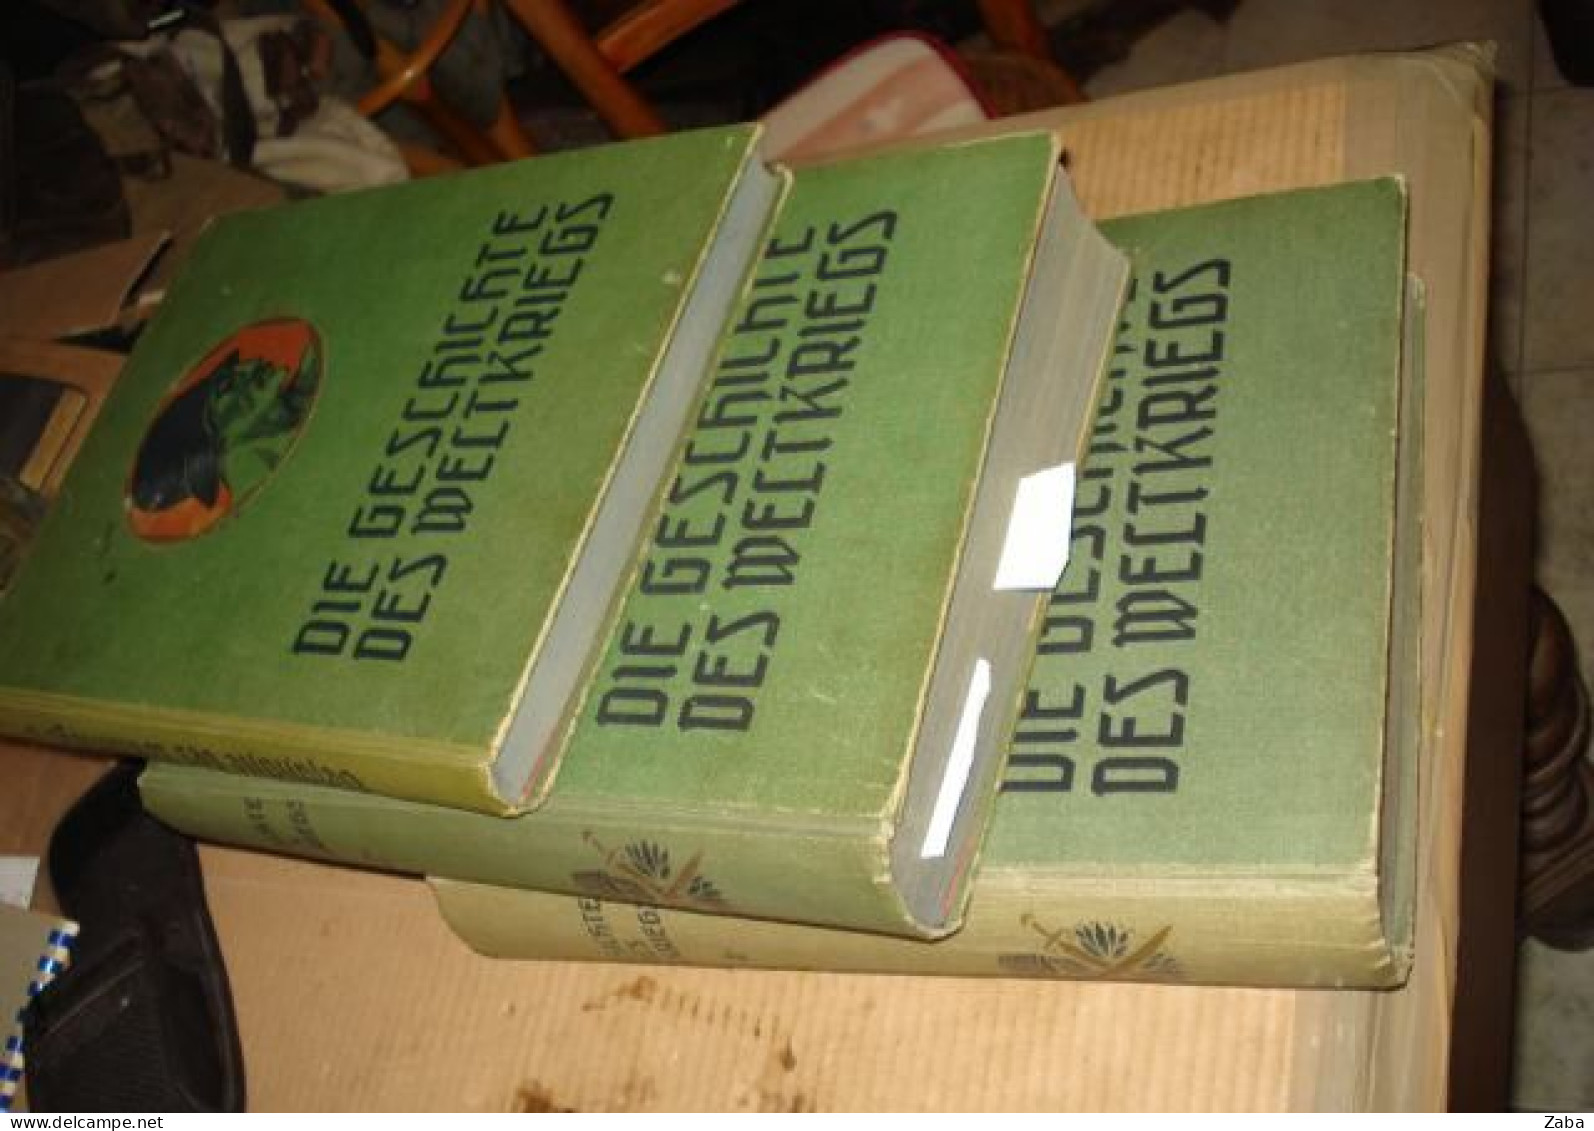 WW1 Three Books of Frst World War,1919